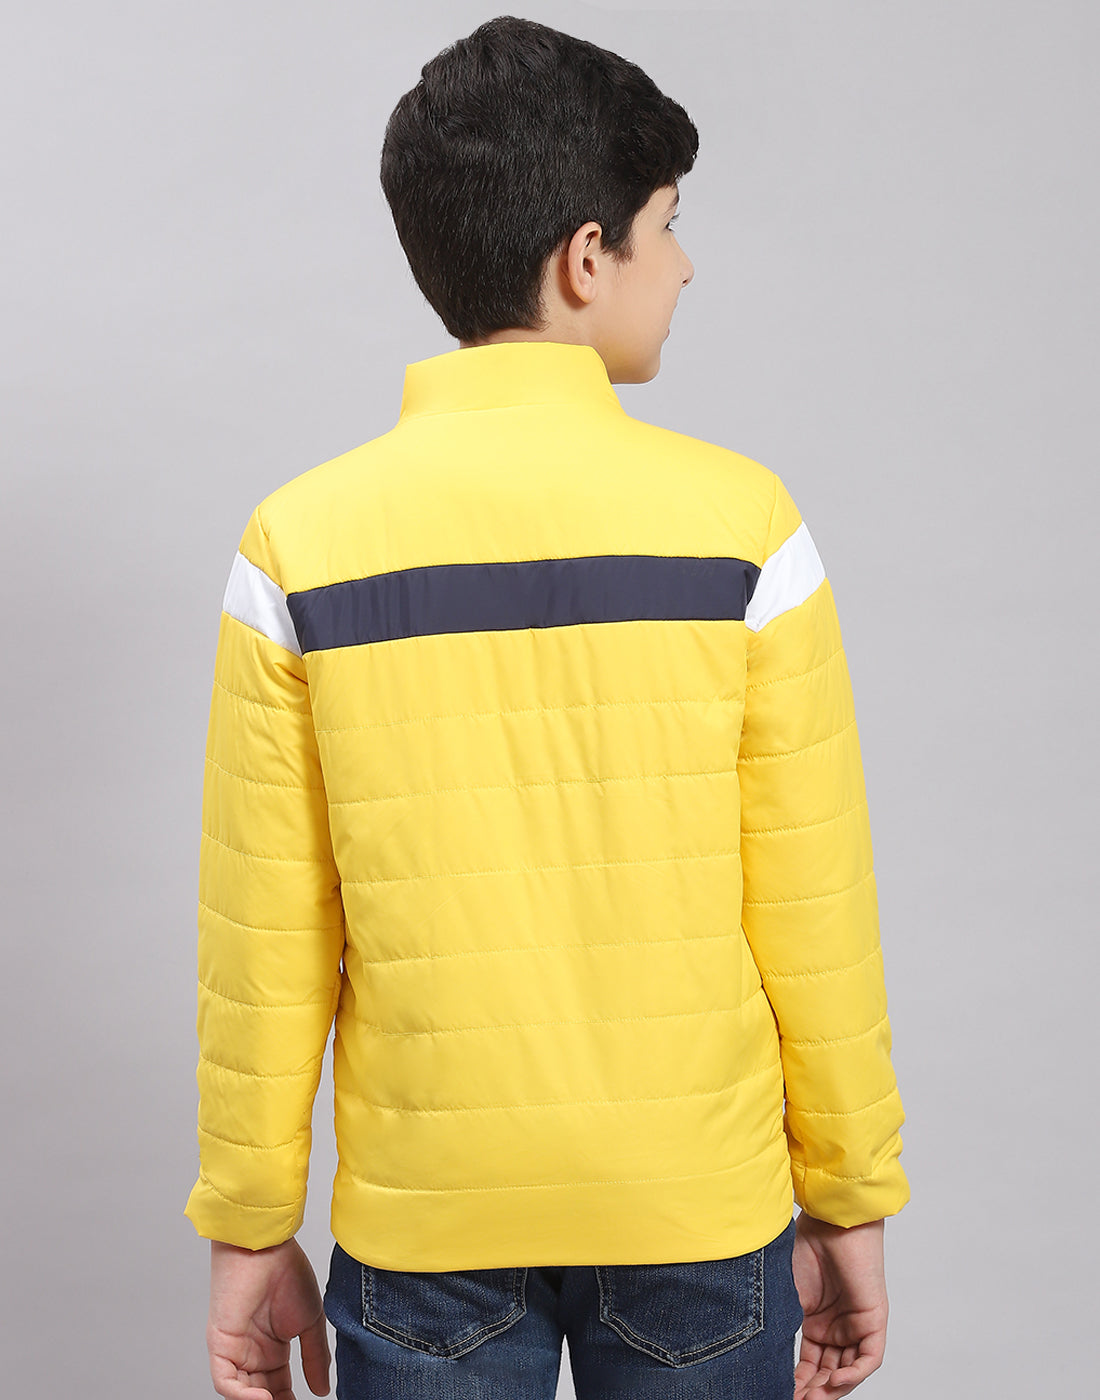 Boys Yellow Solid Stand Collar Full Sleeve Boys Jacket